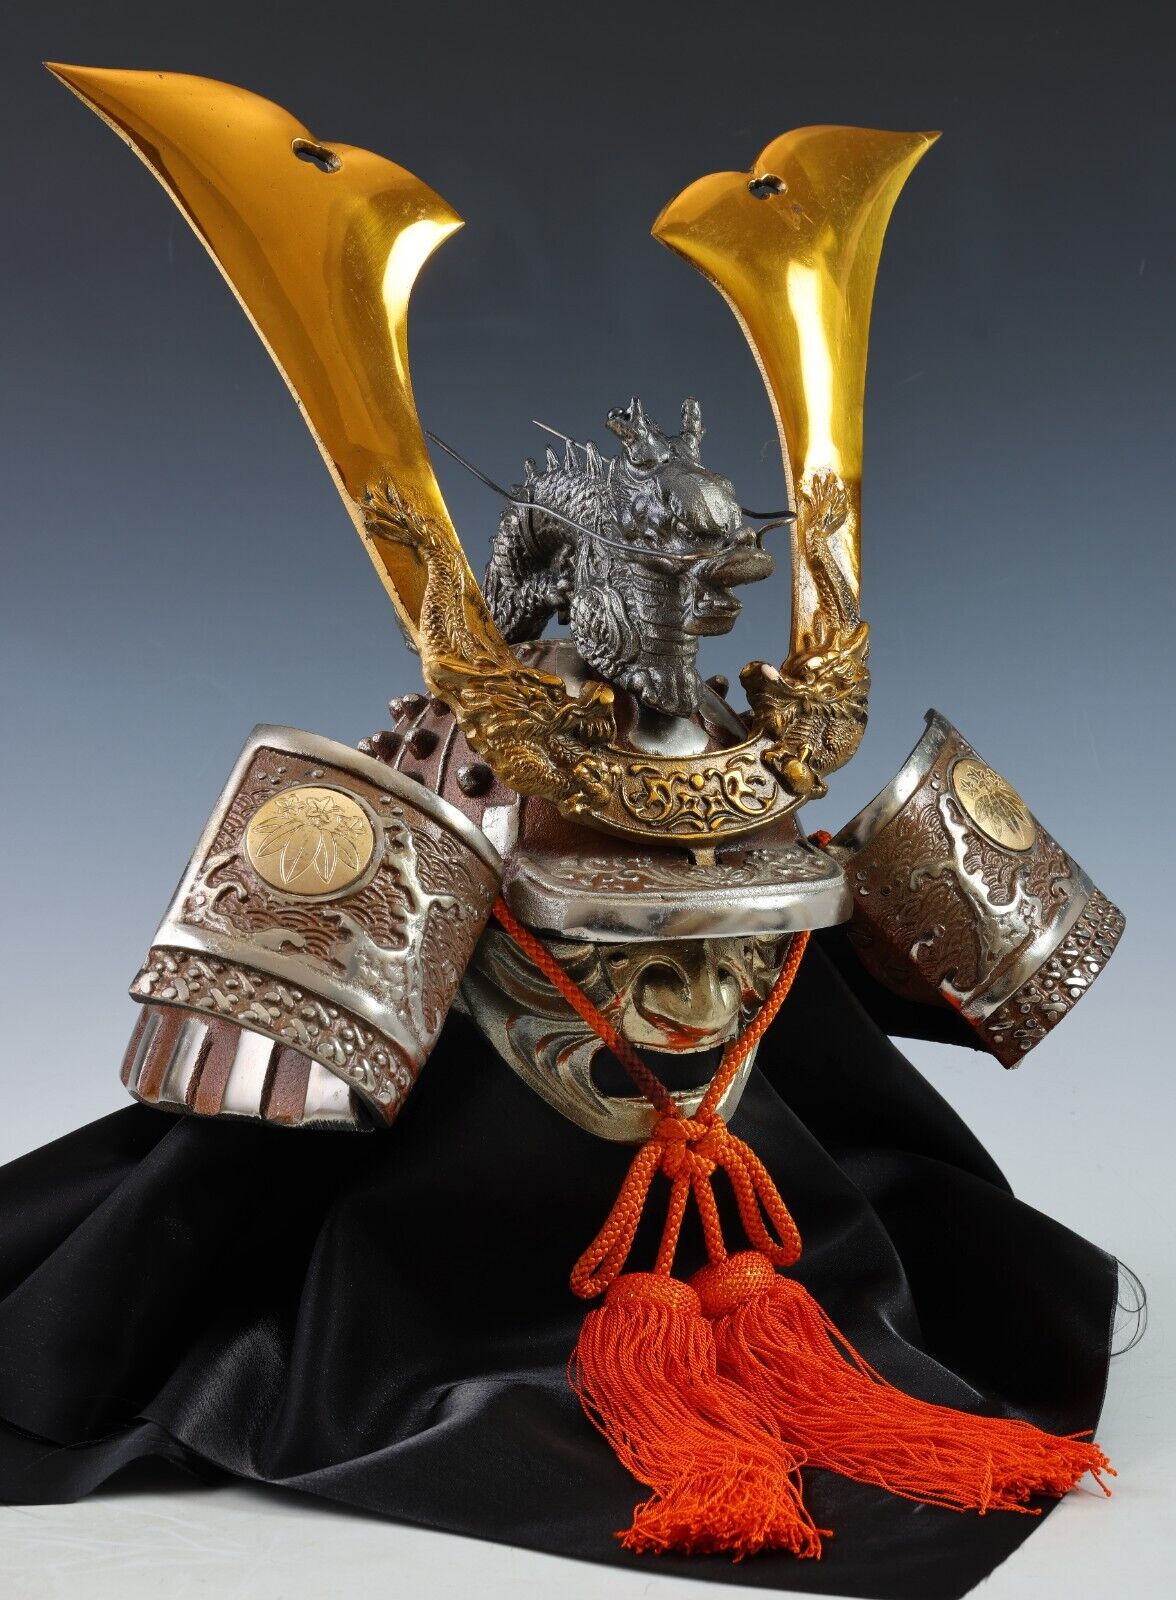 Japanese Old Kabuto Helmet Collectible Samurai Armor Head Protection.